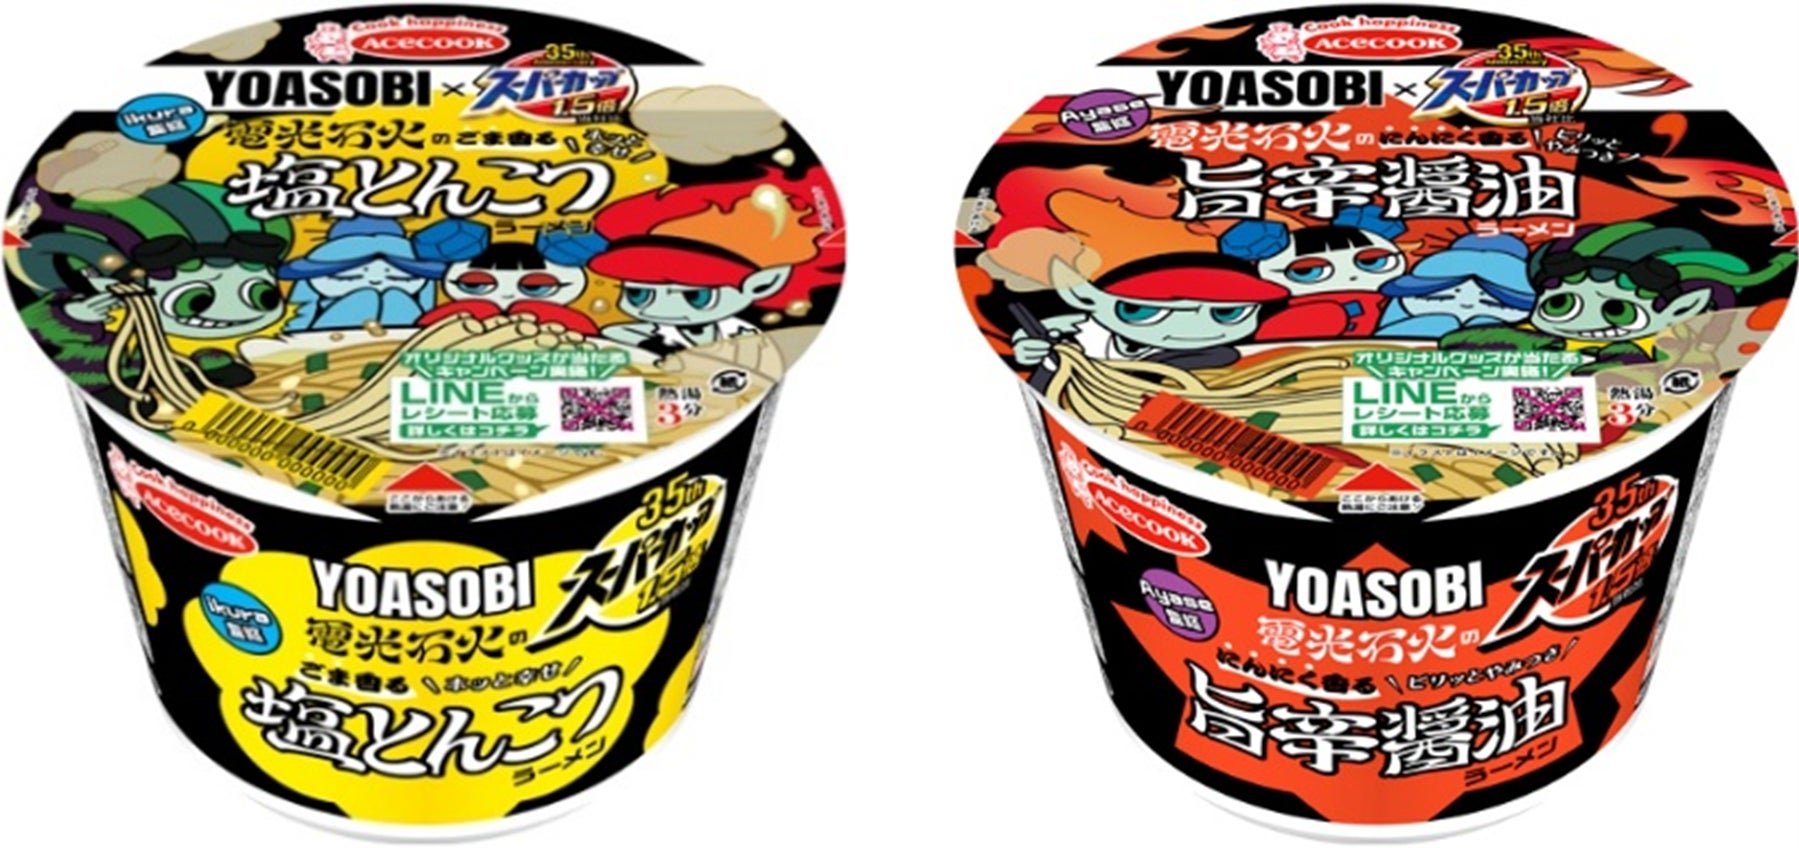 YOASOBI×スーパーカップ１.５倍　YOASOBIによるYOASOBIのためのカップめんが登場！ WEBムービーにて開発の裏側を公開